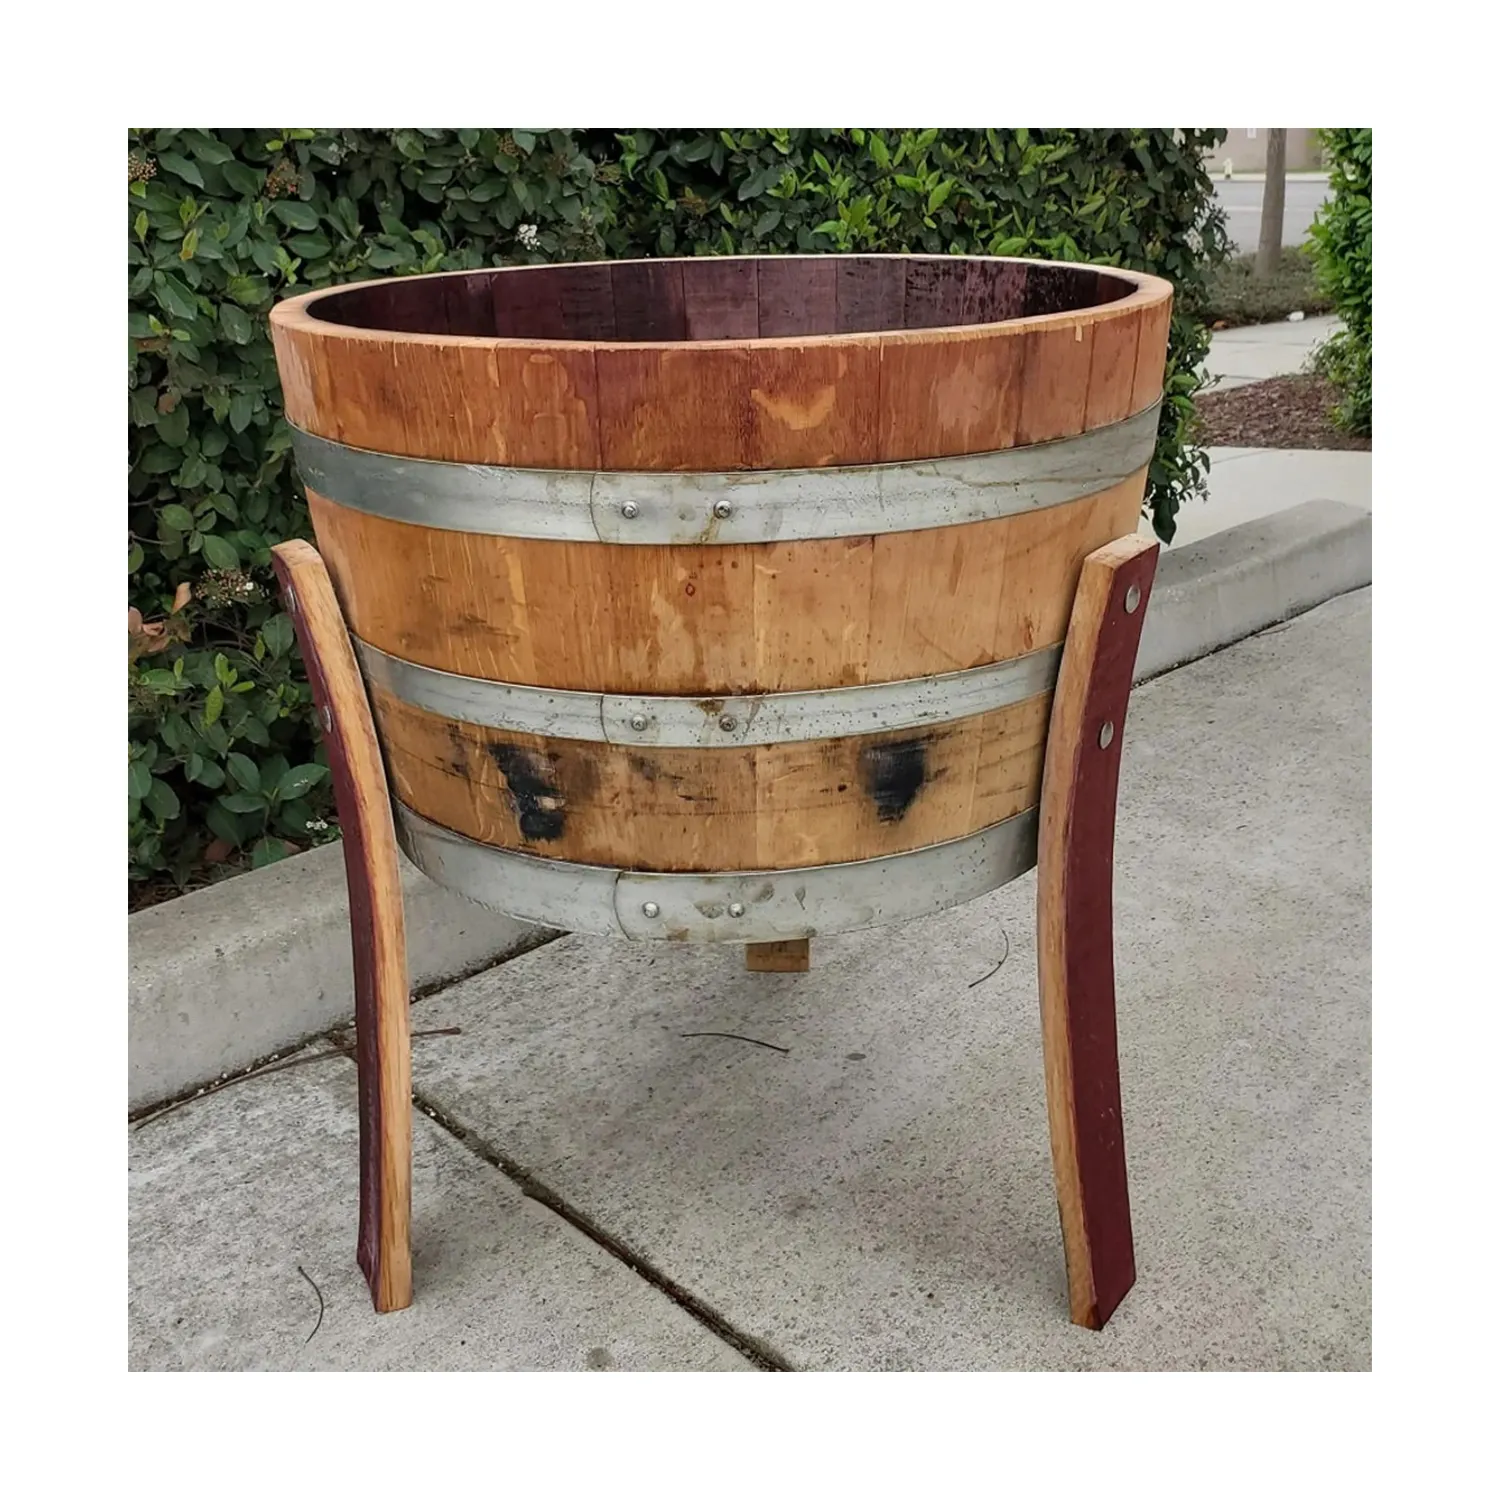 Maceta de barriles de vino de medio barril hecha a mano con patas | Maceta de madera redonda grande para exteriores | Macetas de jardín de barril de madera 1/2